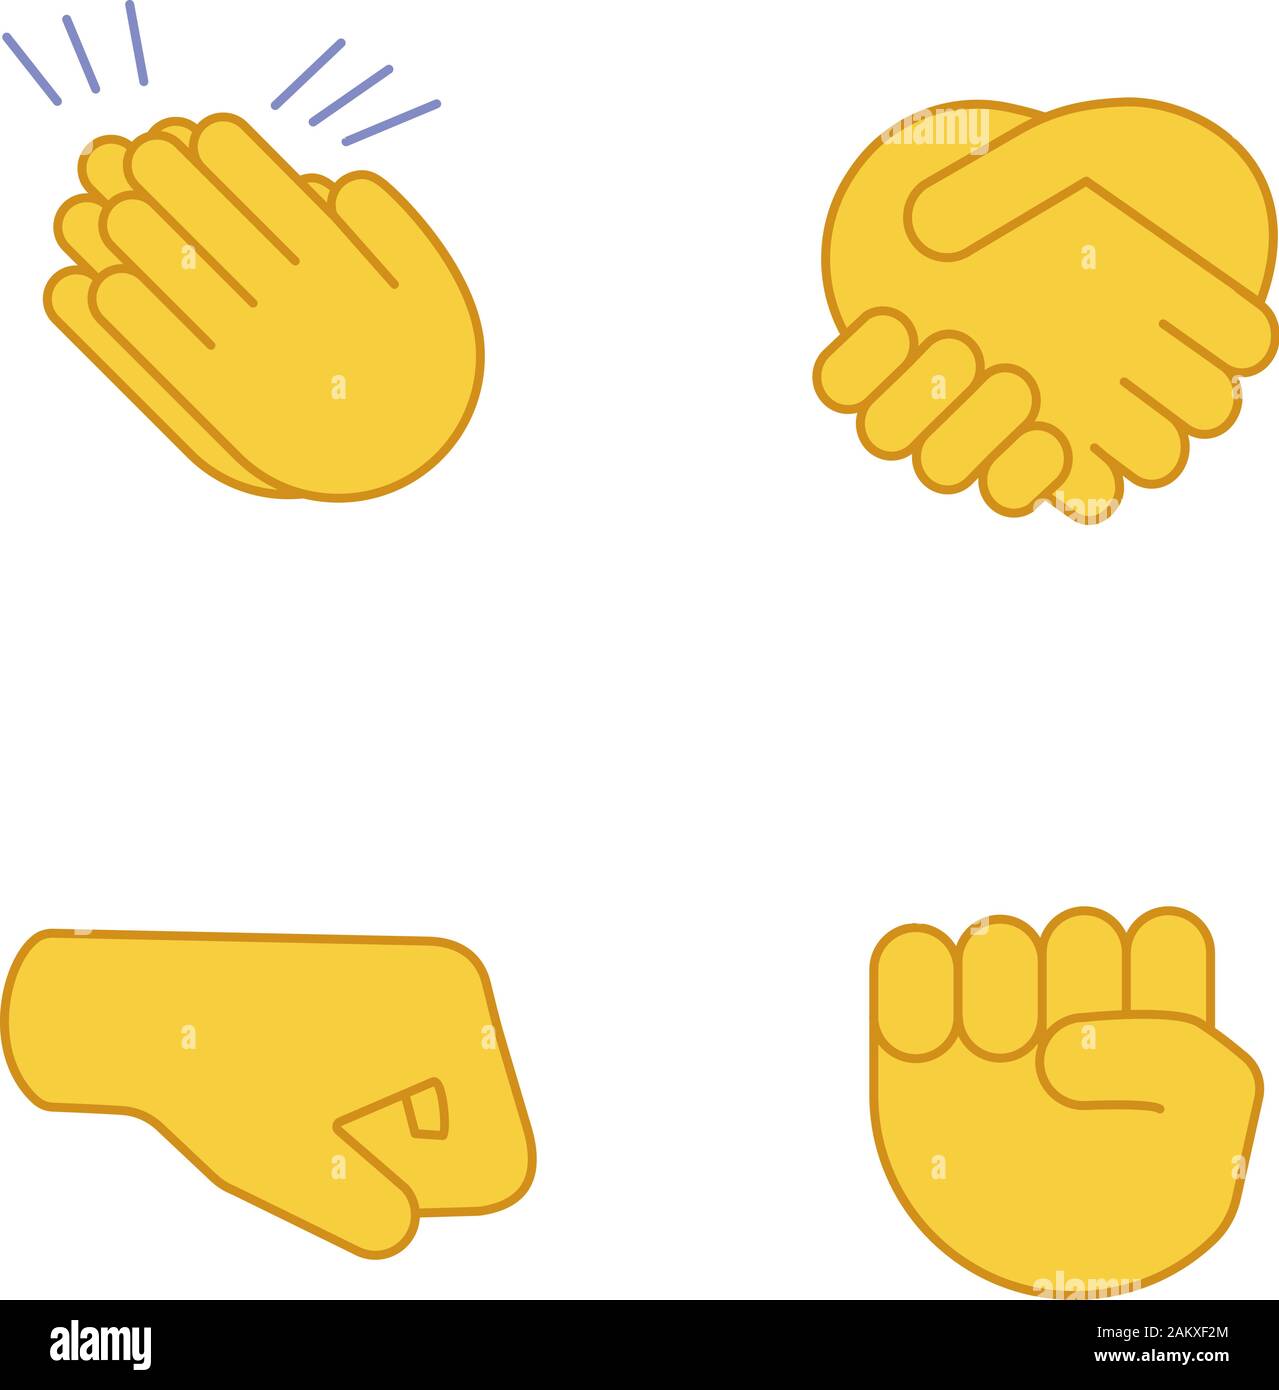 Handshake icon. Hand gesture emoji vector illustration. Stock